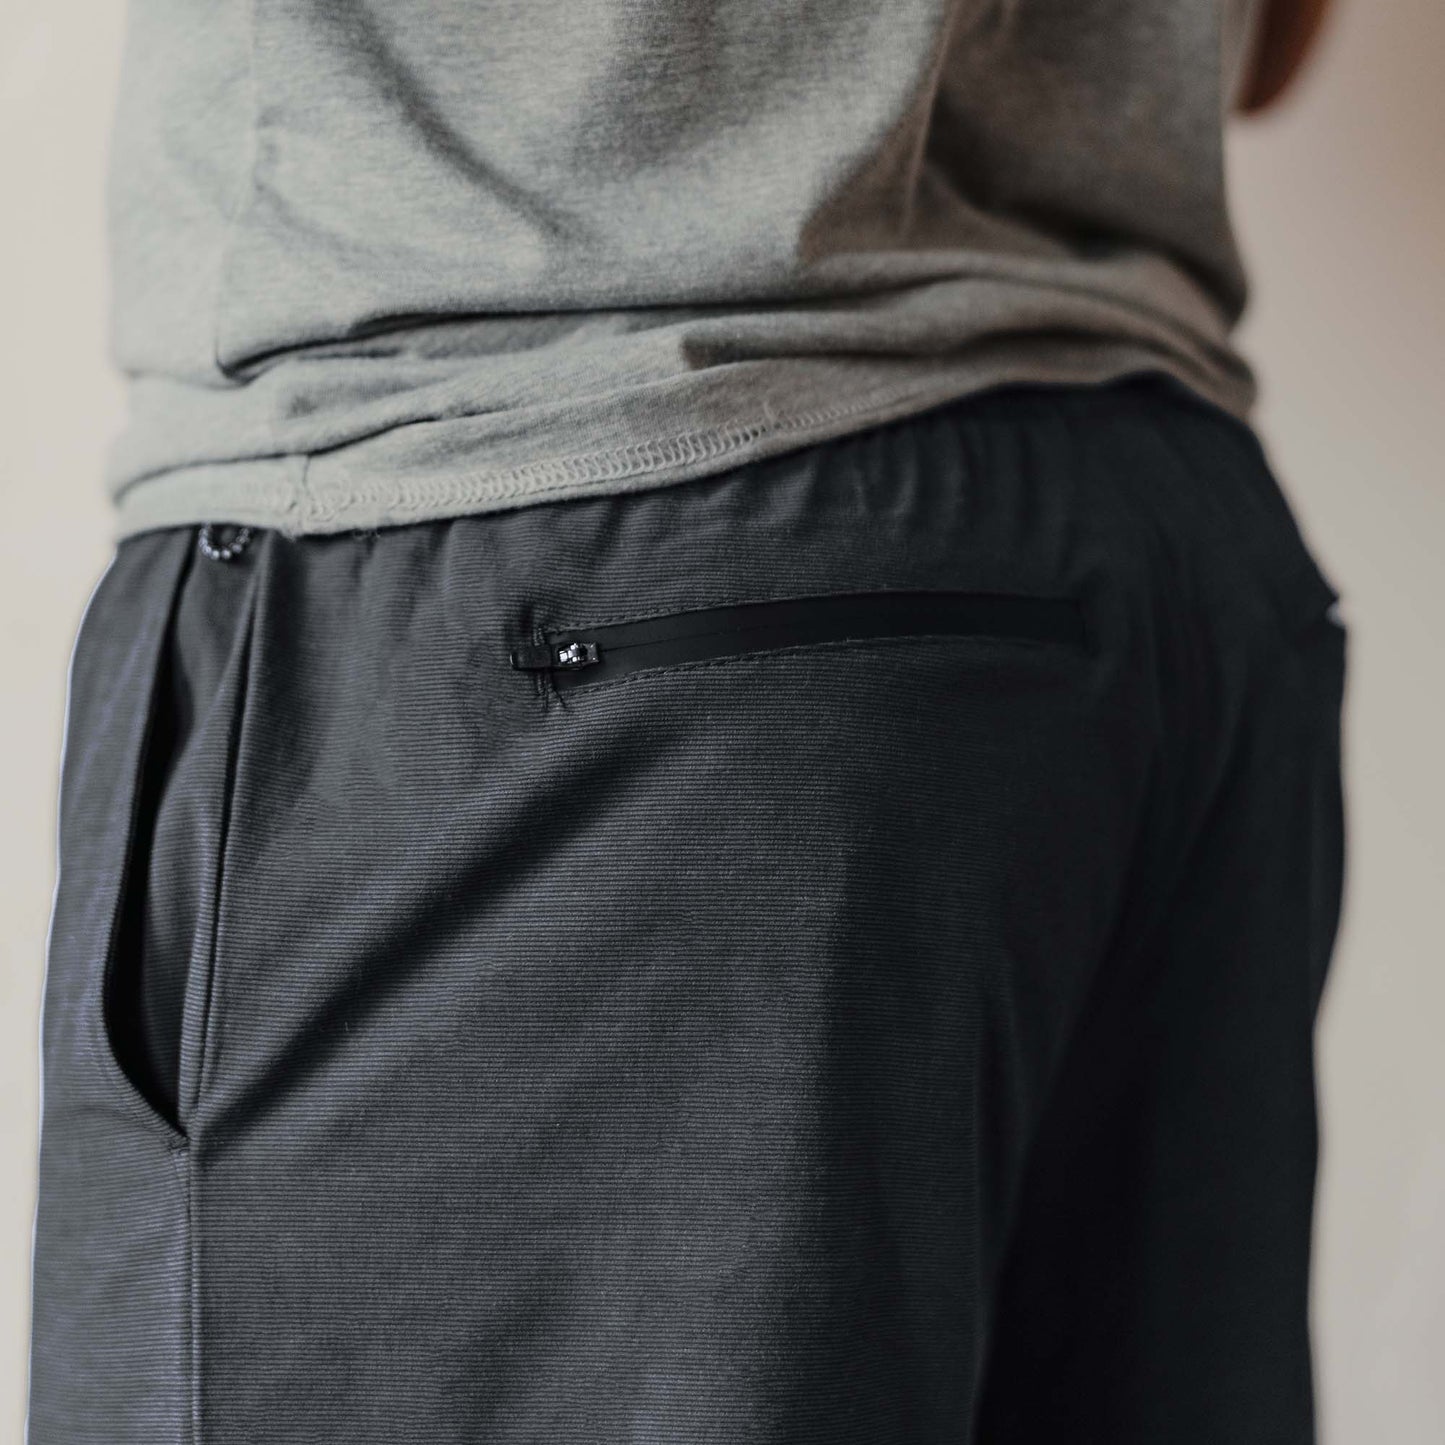  Utility Shorts 2.0 - Charcoal | Grunt Style 